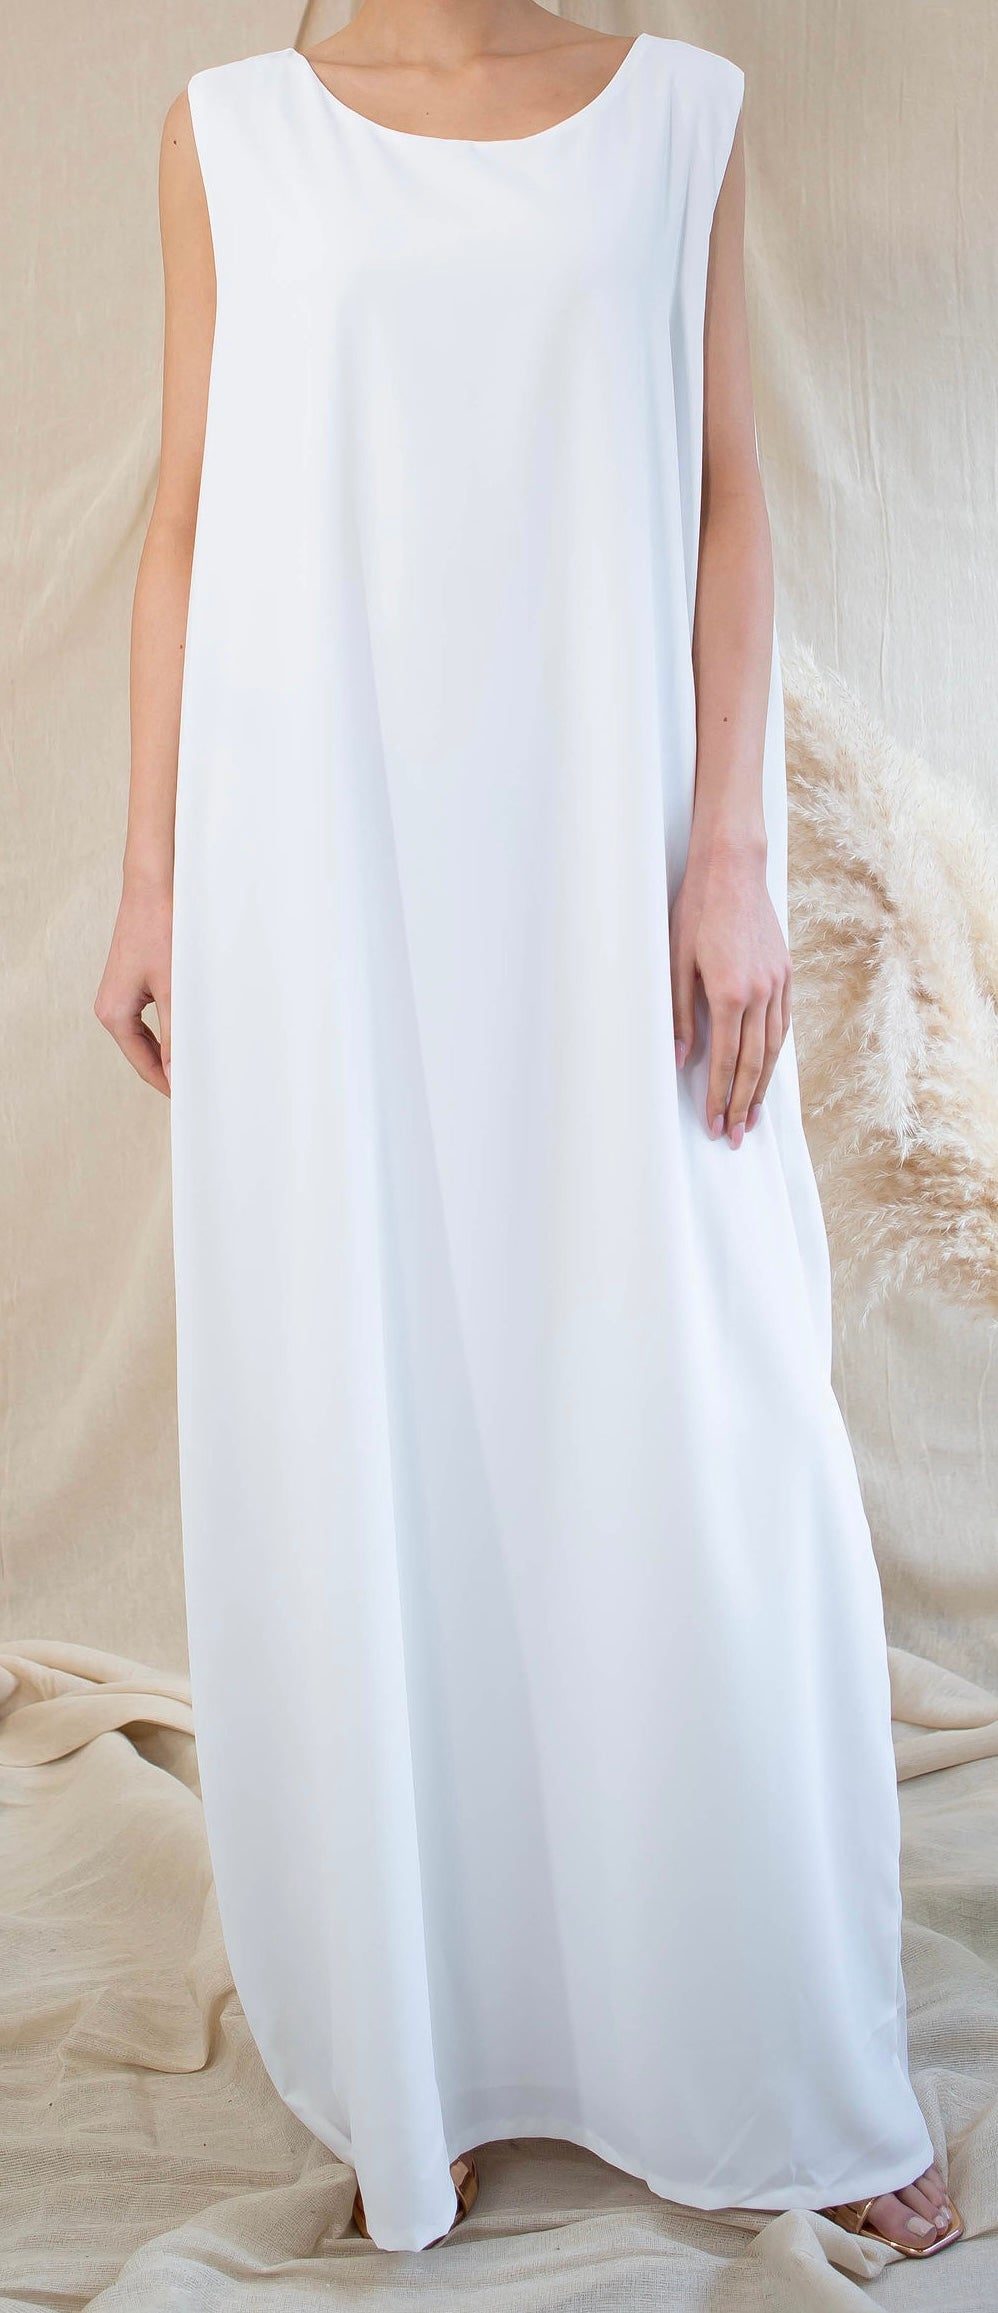 White Sleeveless Slip Dress with Lining